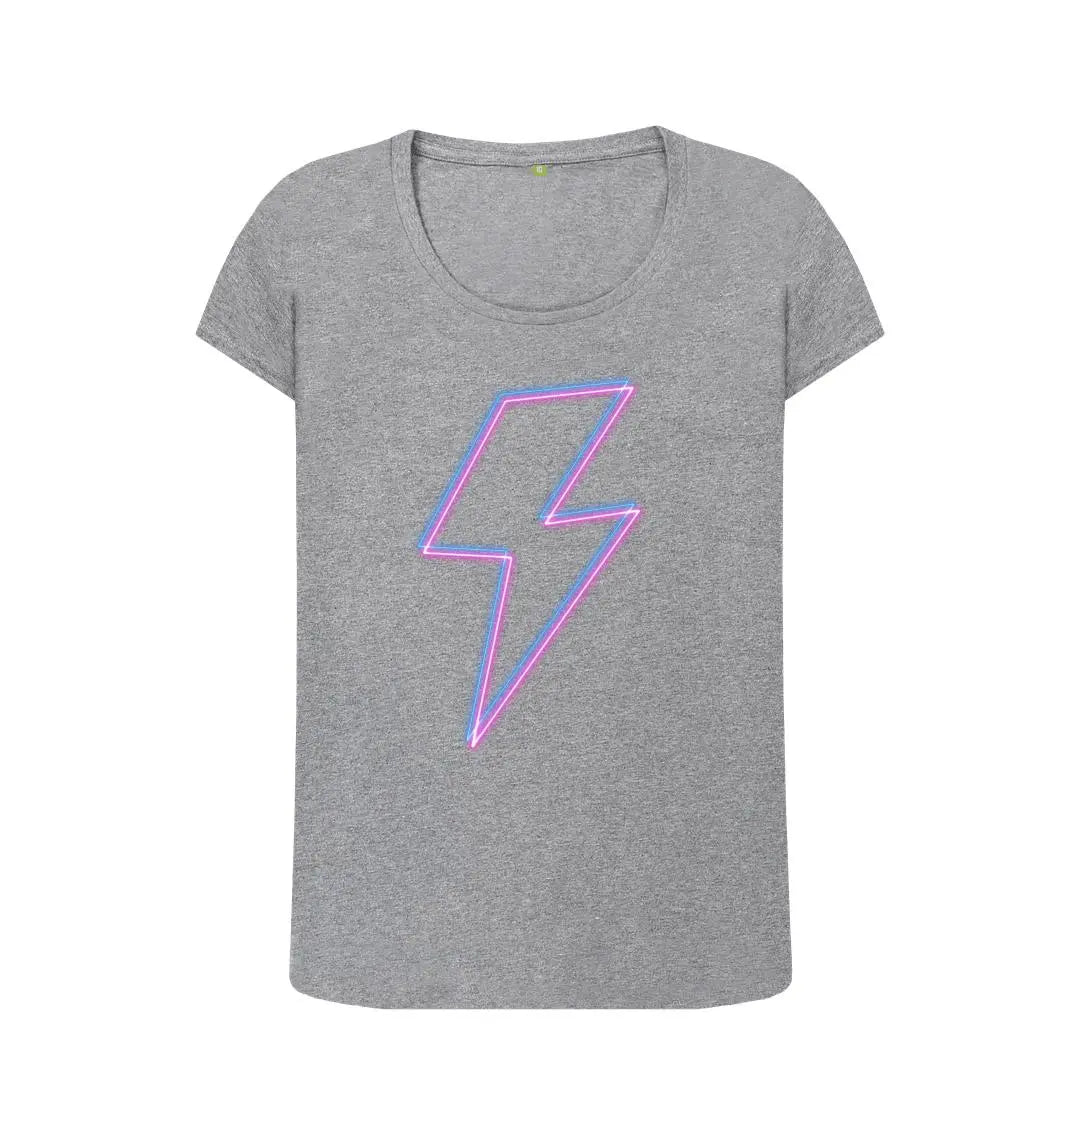 Neon lightning bolt scoop neck t-shirt